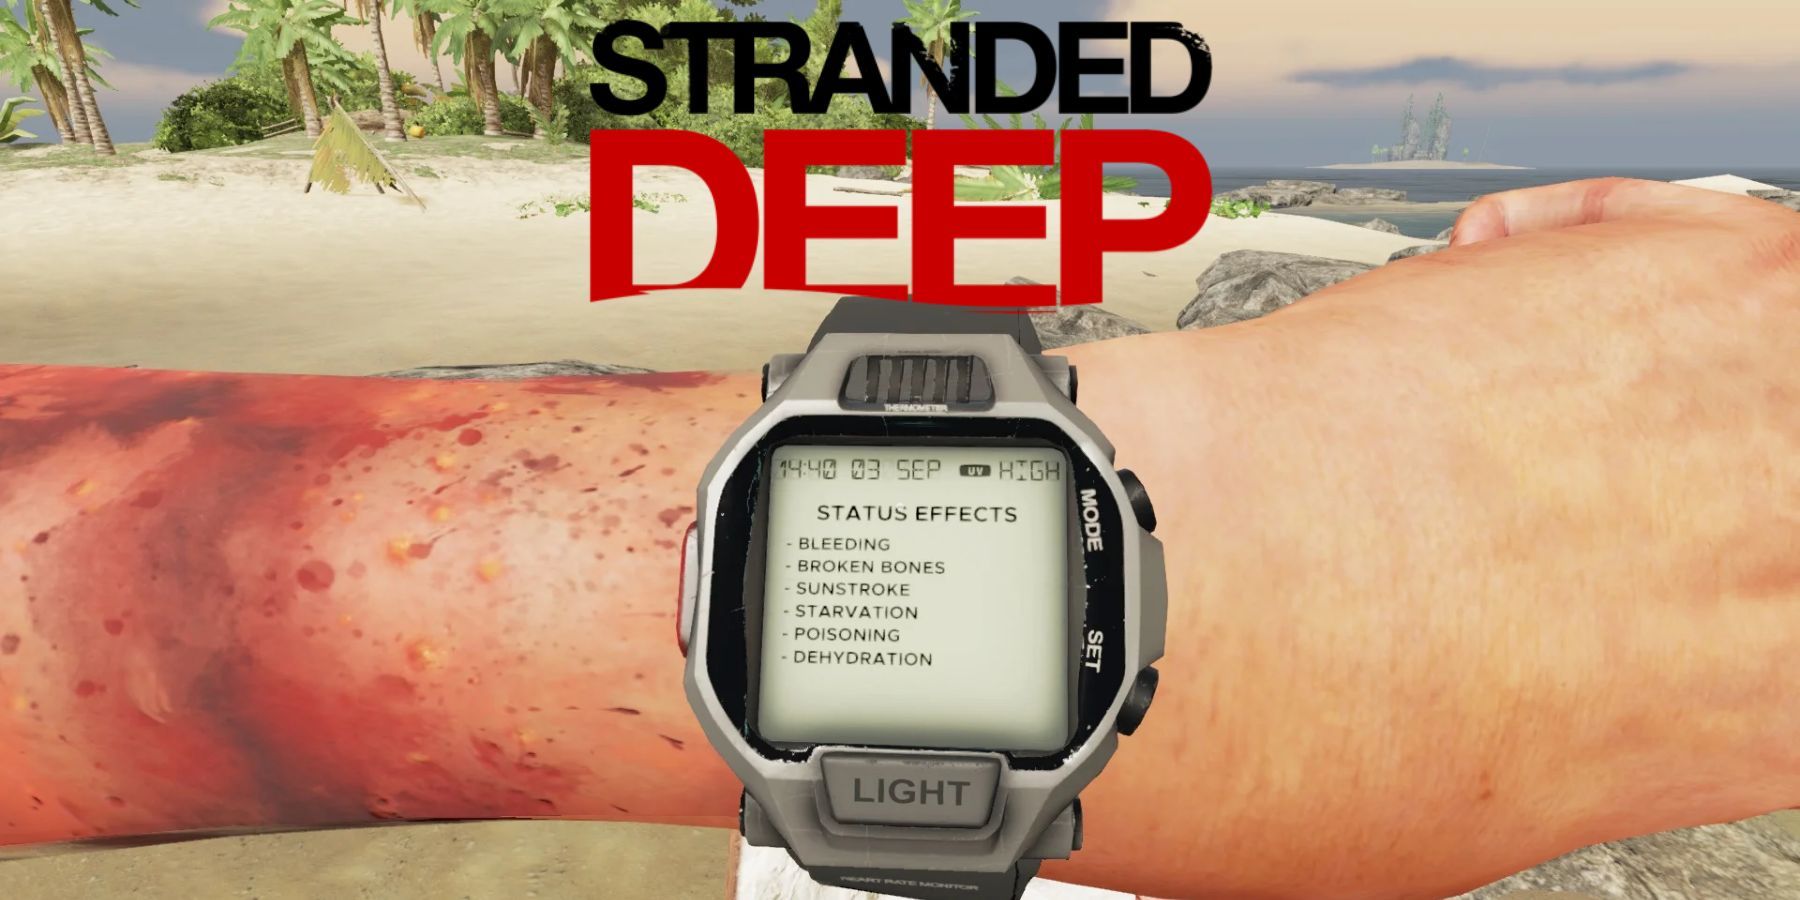 stranded deep watch status effects broken bones highlights